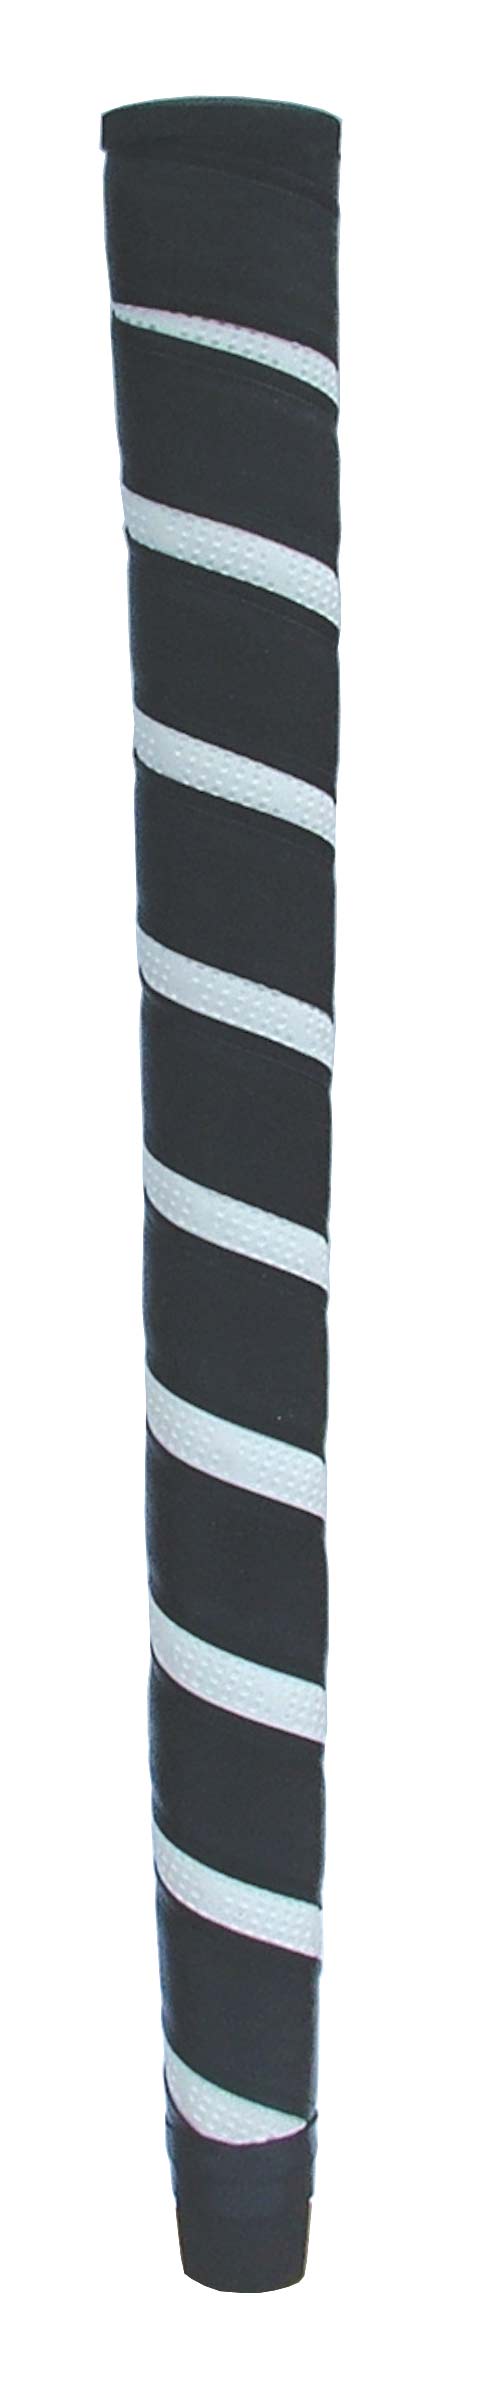 Longridge Wrap Style Putter Golf Grip Black/ White